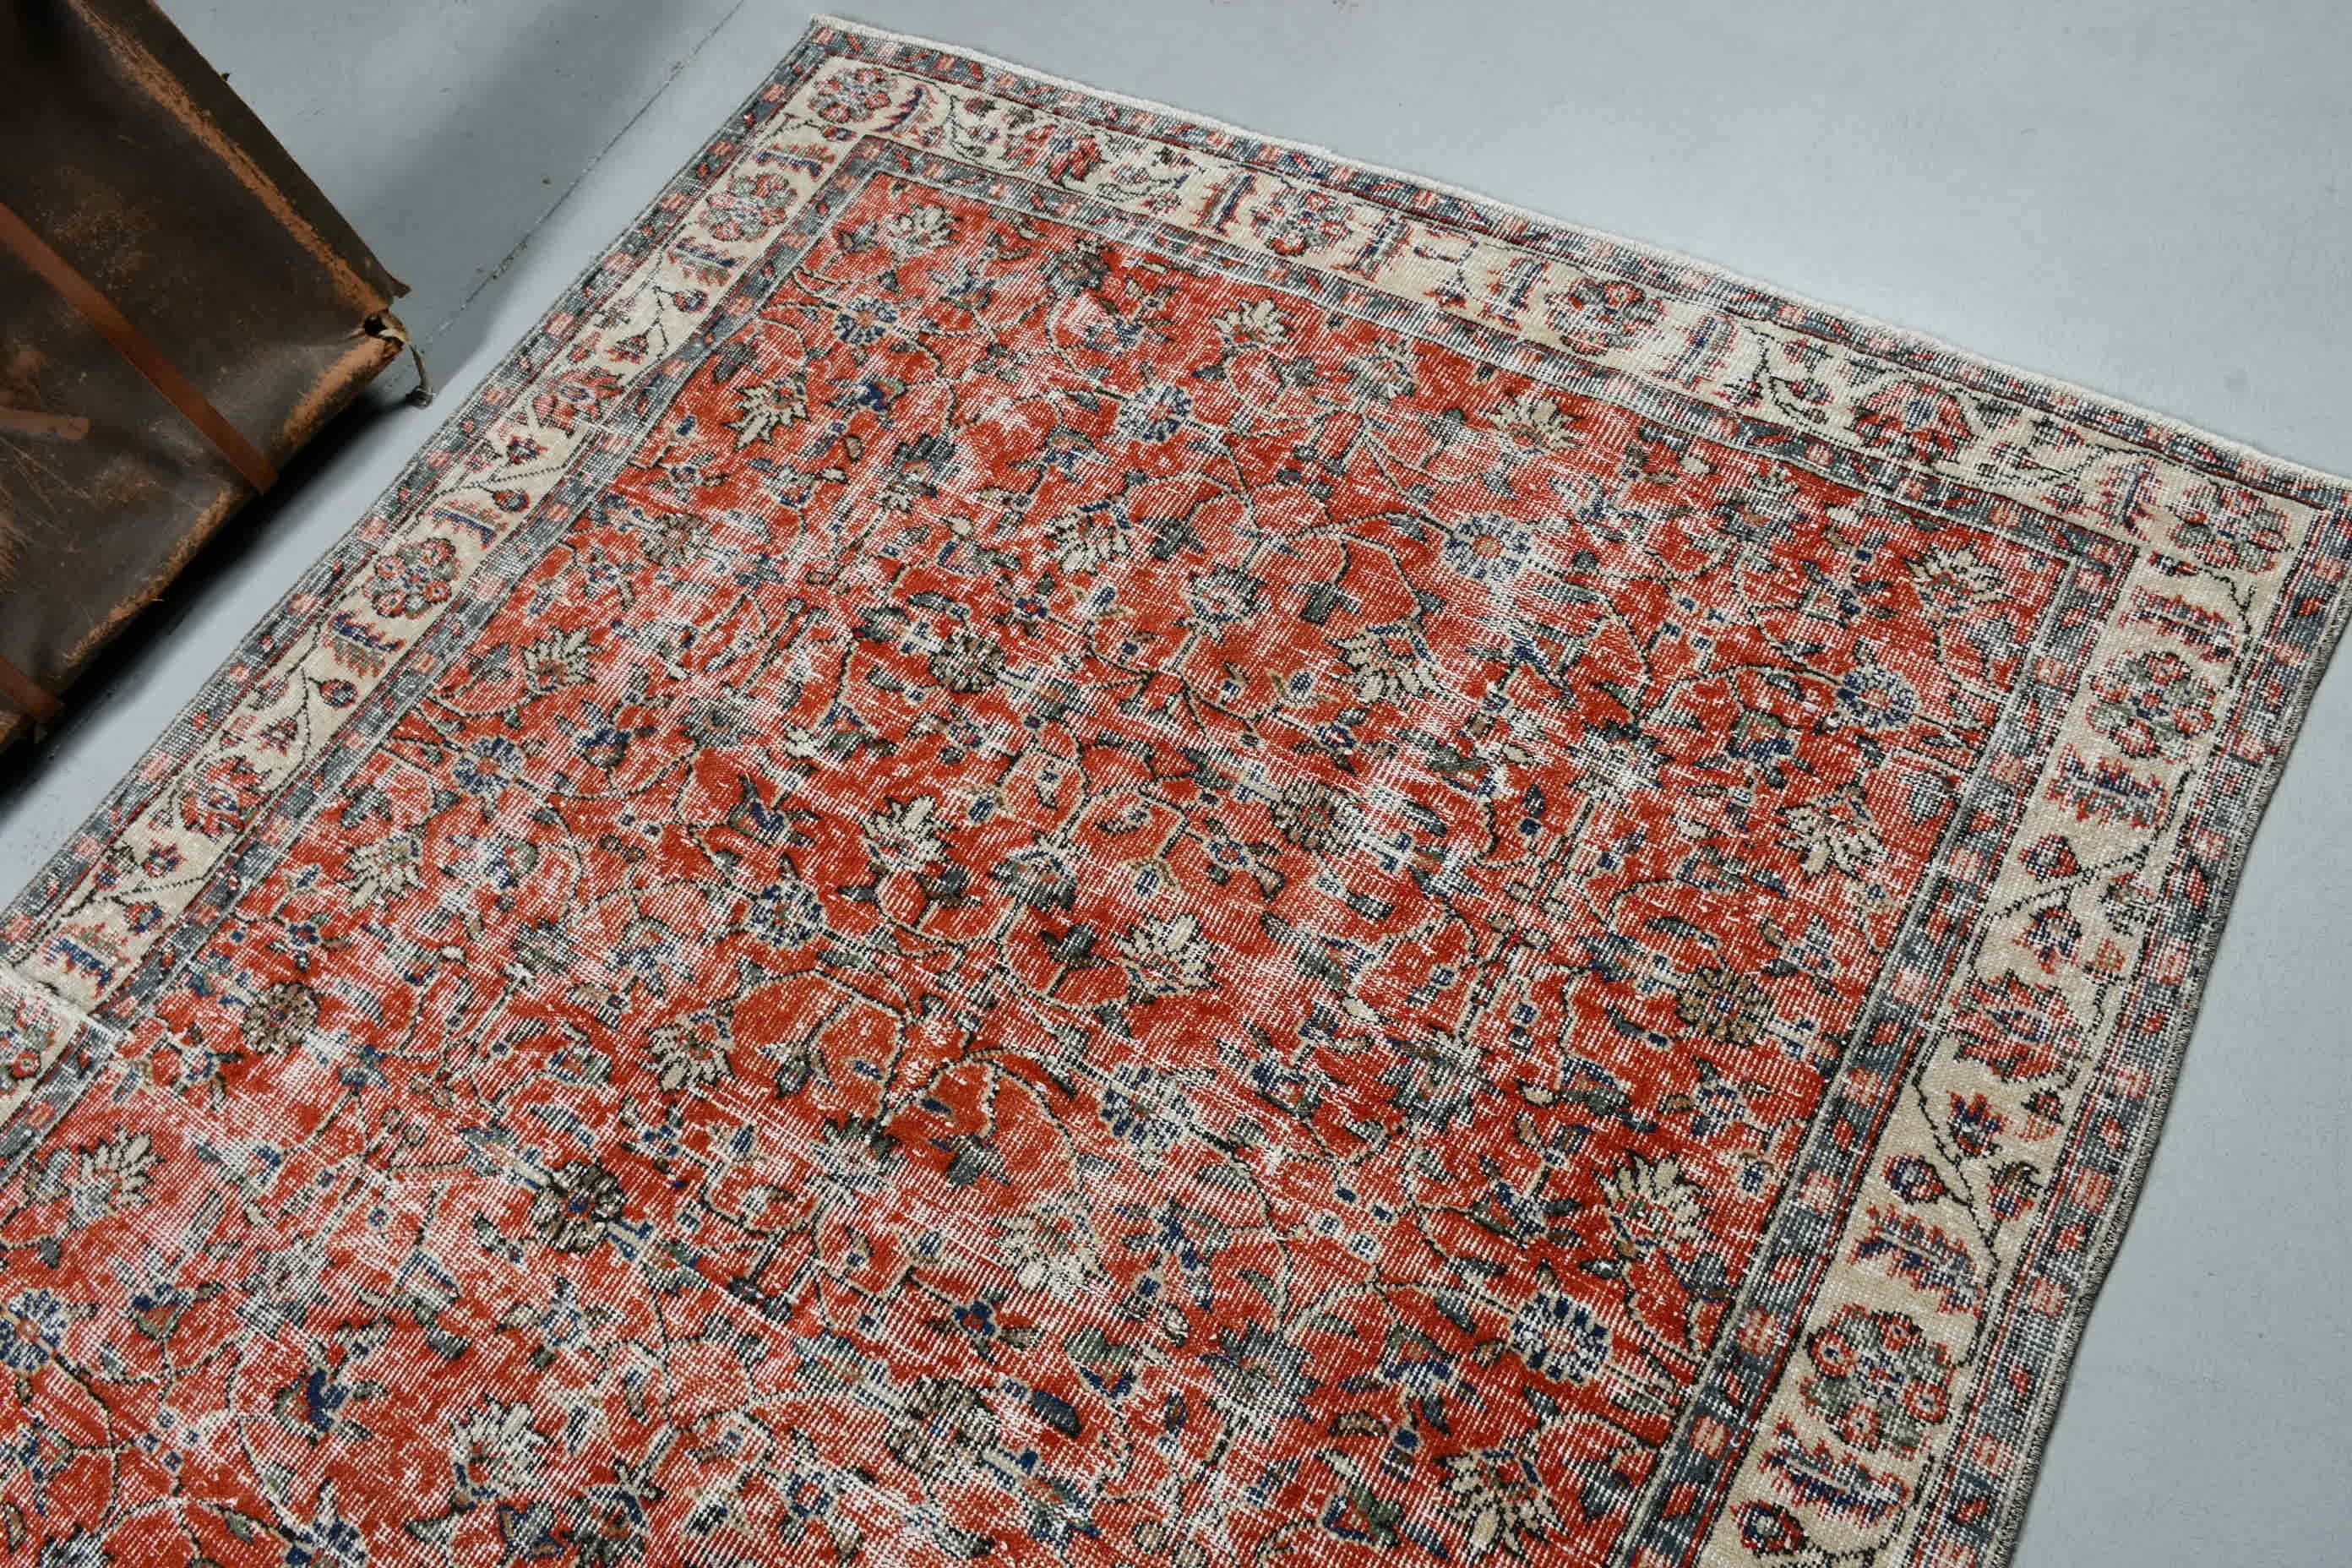 Red Oushak Rug, Muted Rug, Vintage Rug, Bedroom Rugs, 5.2x8.3 ft Large Rug, Living Room Rug, Anatolian Rug, Turkish Rug, Rugs for Bedroom